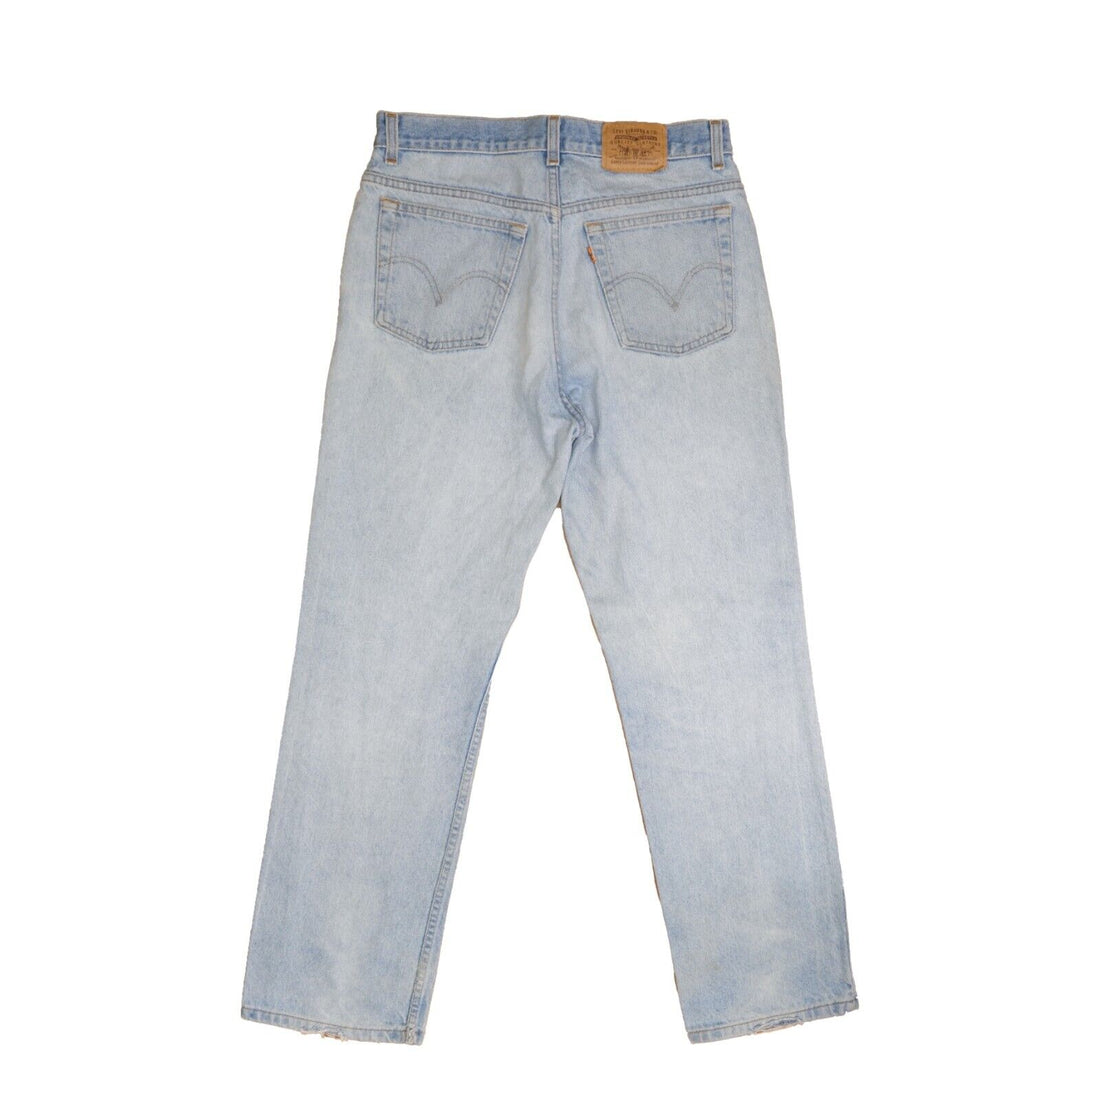 Vintage Levi Strauss & Co 505 Denim Jeans Size 32 X 30 Orange Tab 5061902120